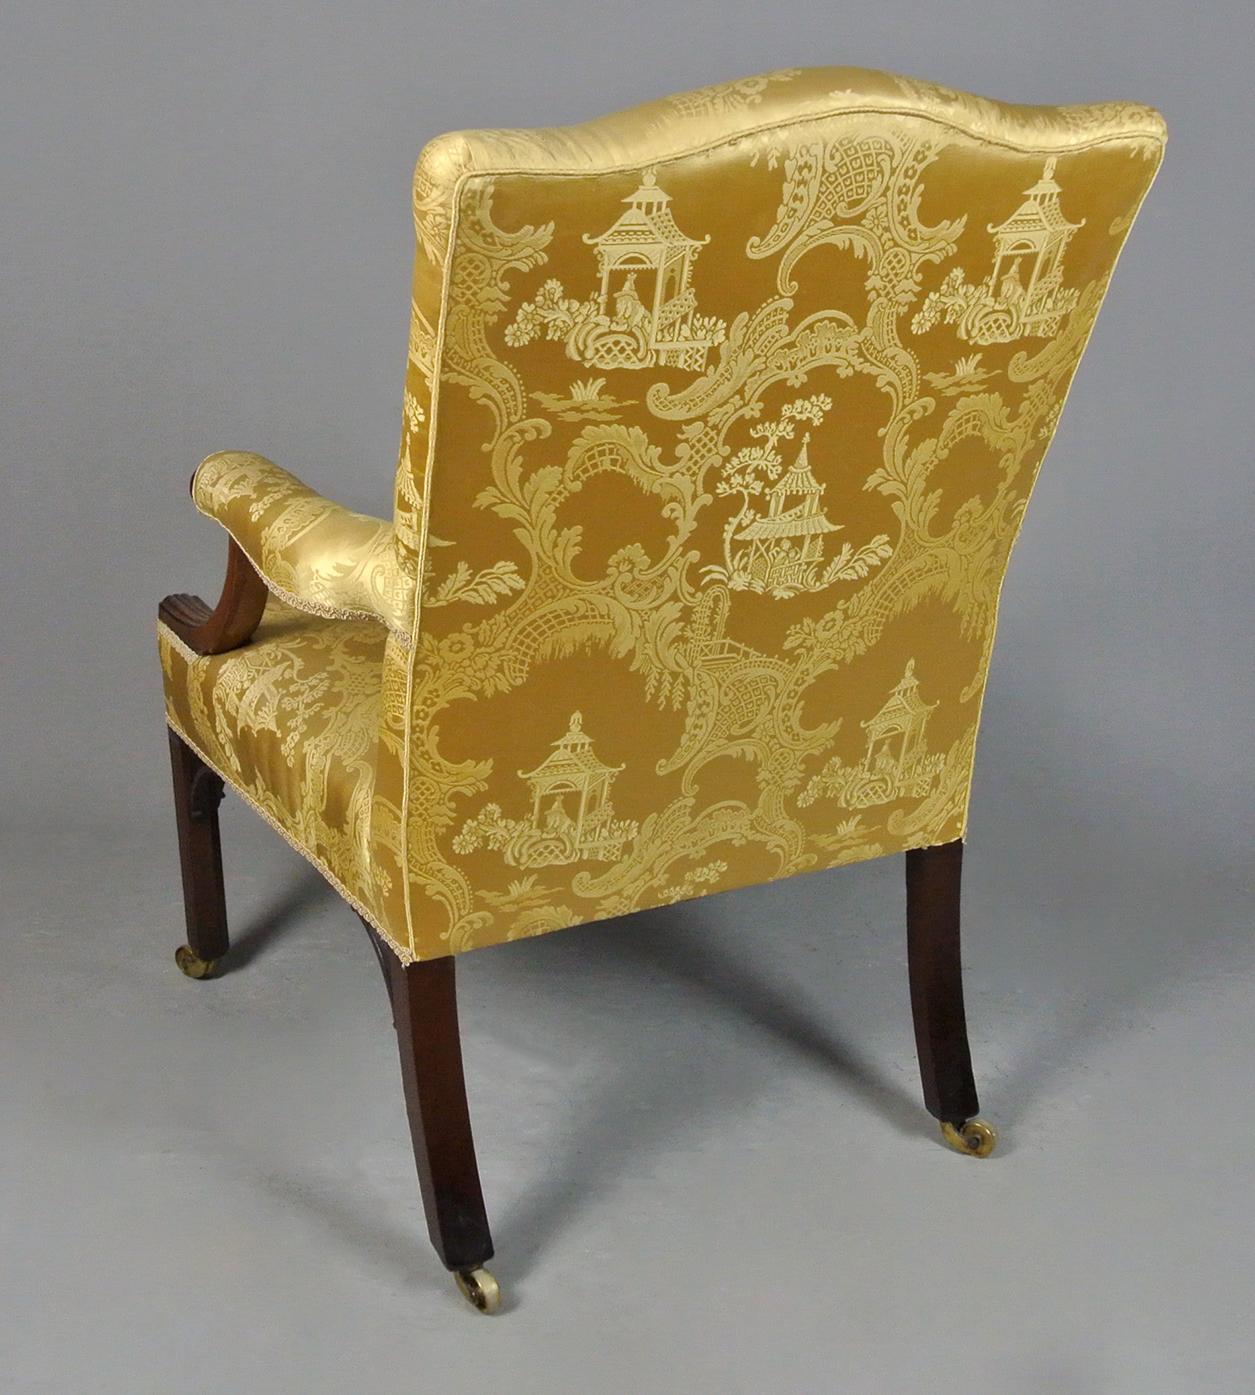 Exemplary George II Mahogany Gainsborough Chair c.1750 For Sale 2